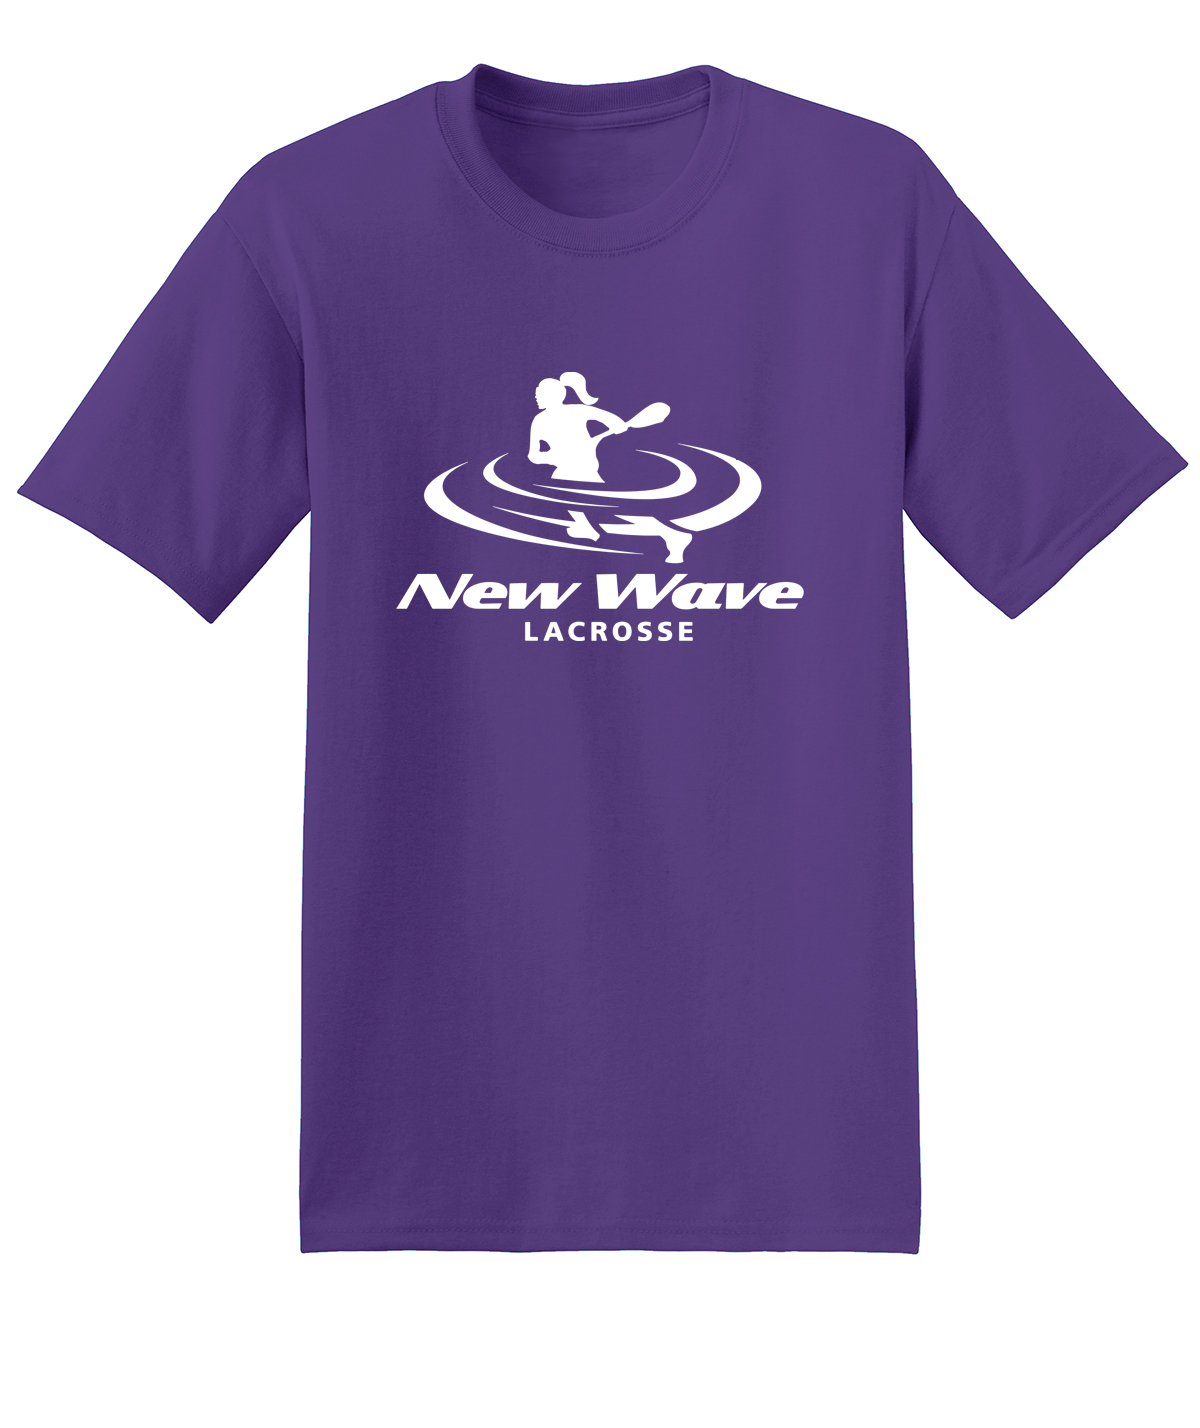 New Wave Girls Lacrosse T-Shirt